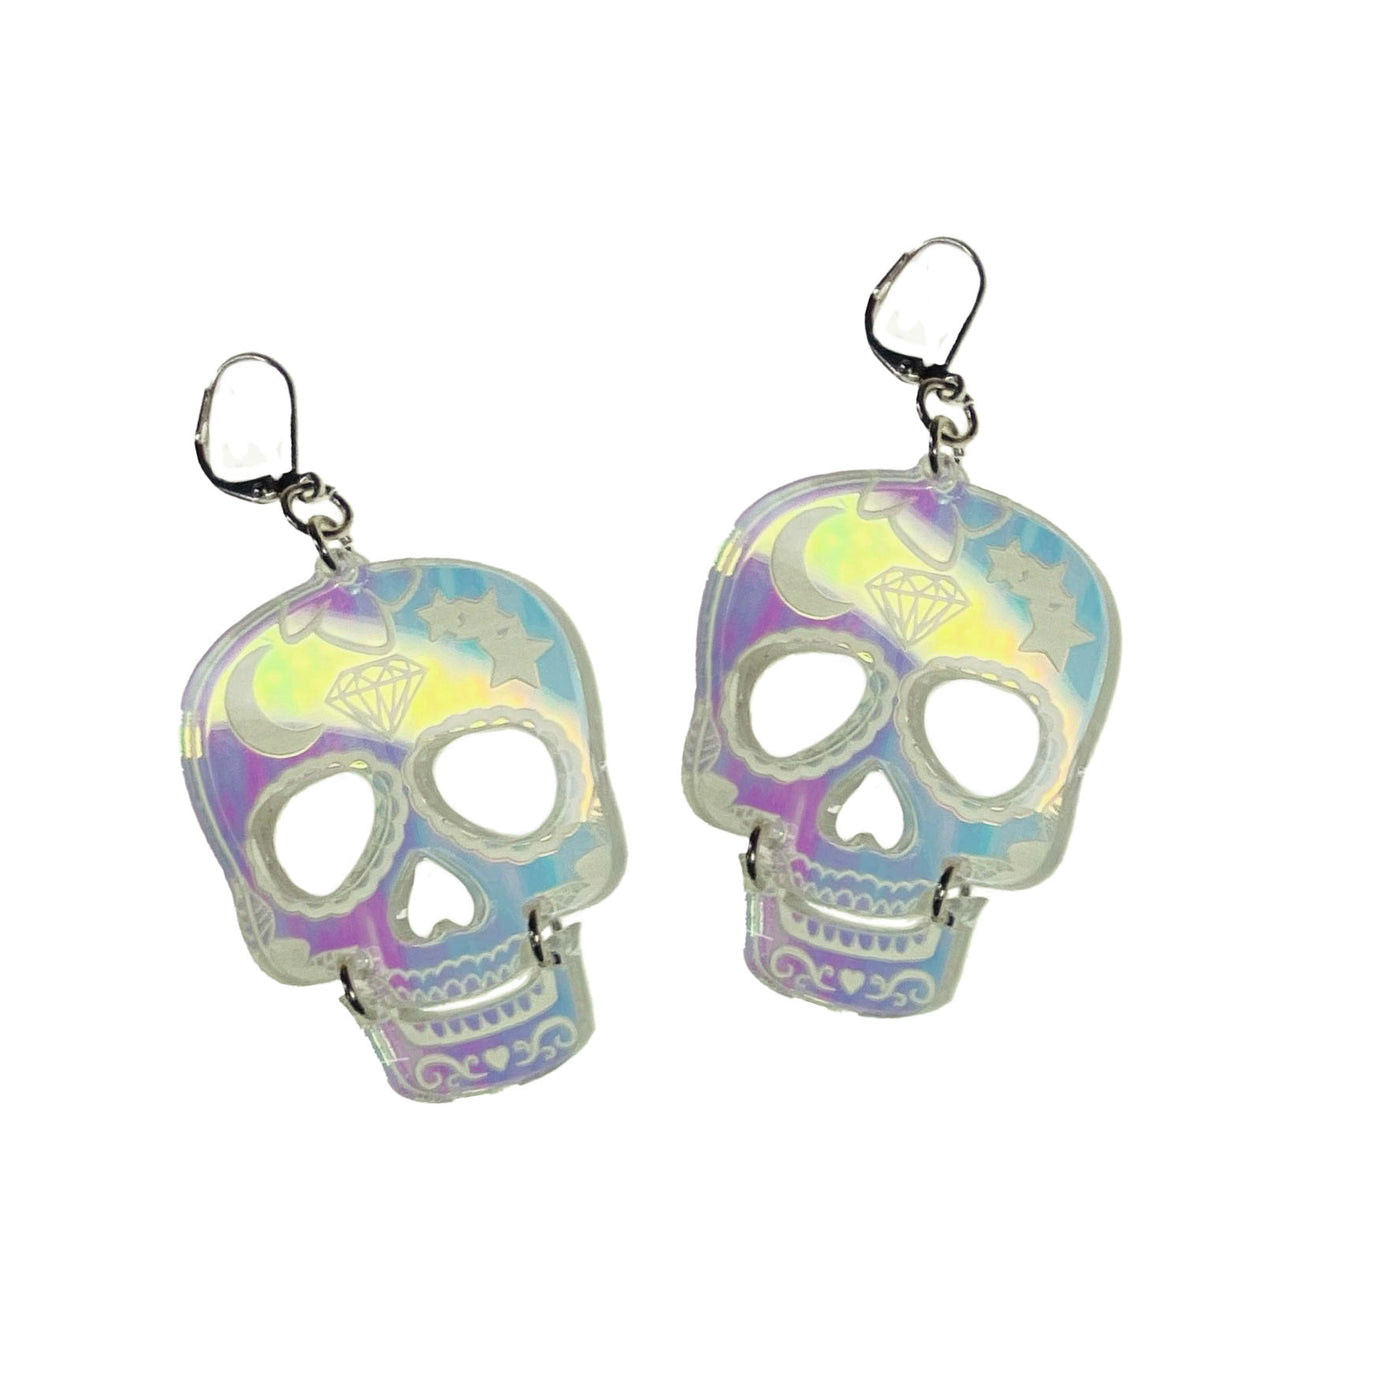 XL Sugar Skull Dangle Earrings in Iridescent